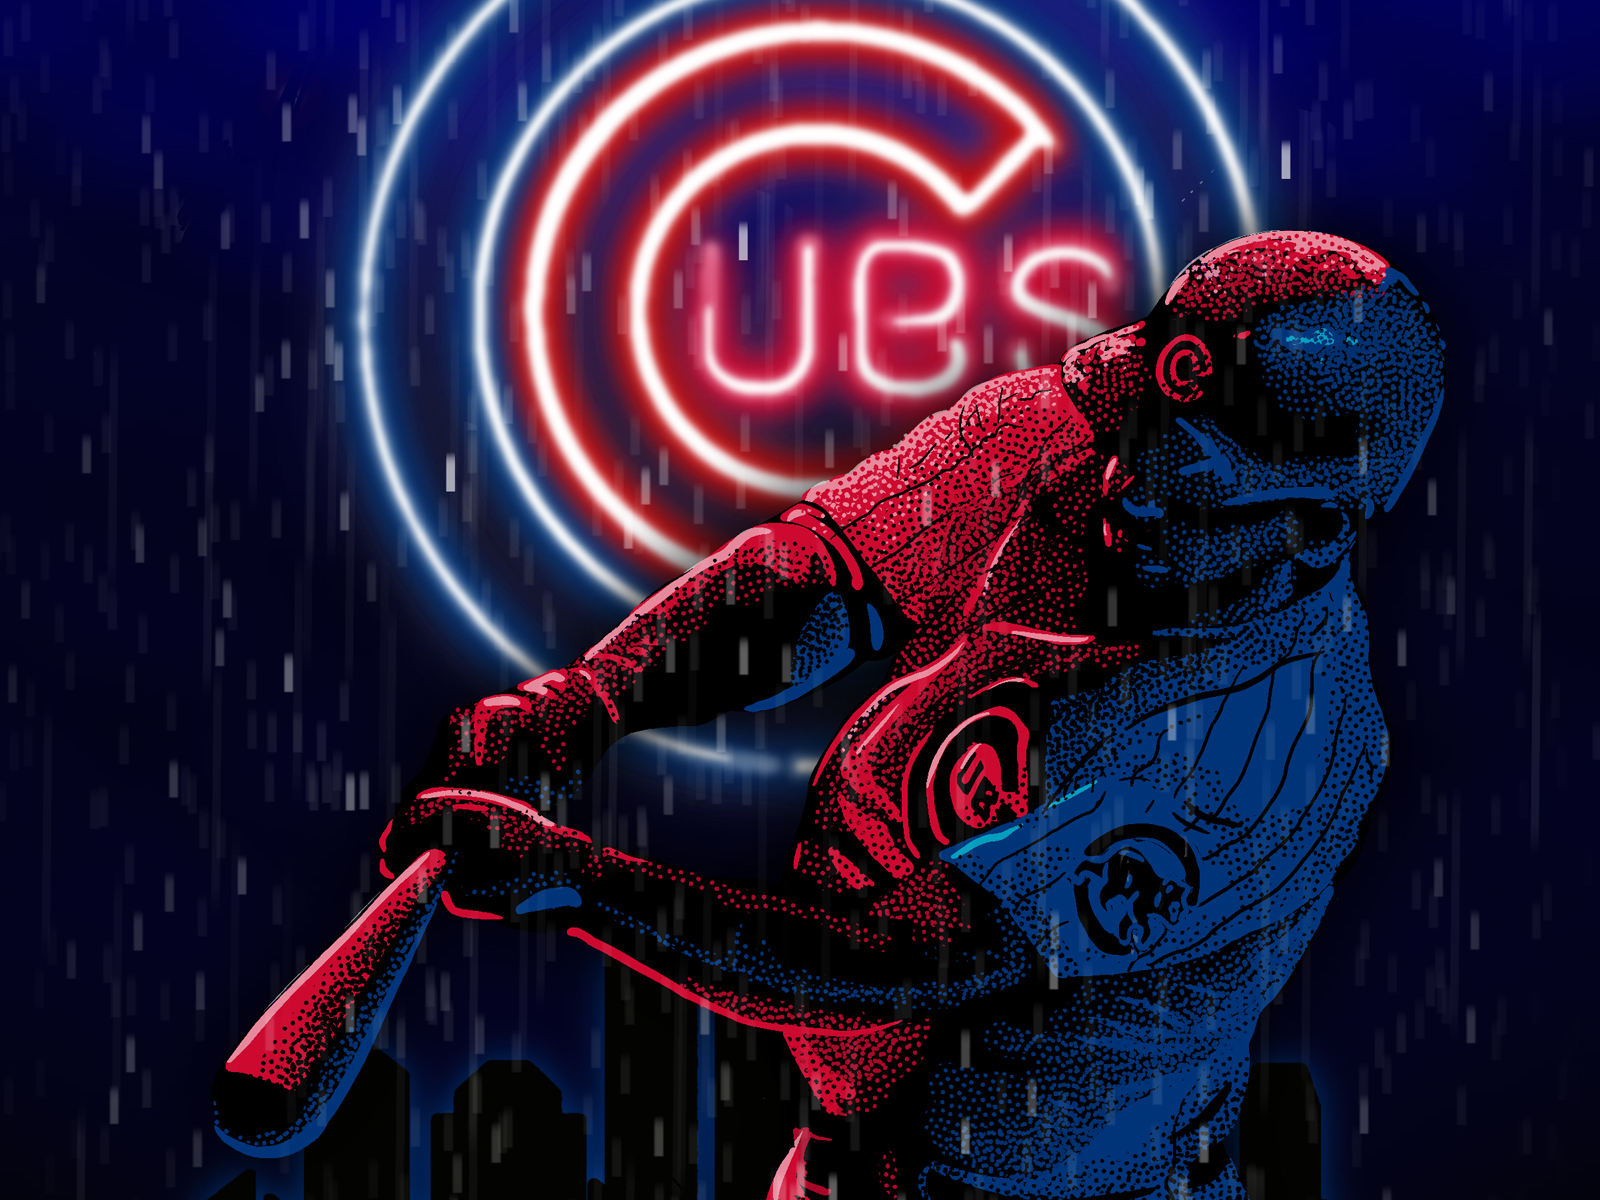 Go Cubs Go! cubs sports drawing design poster illustration